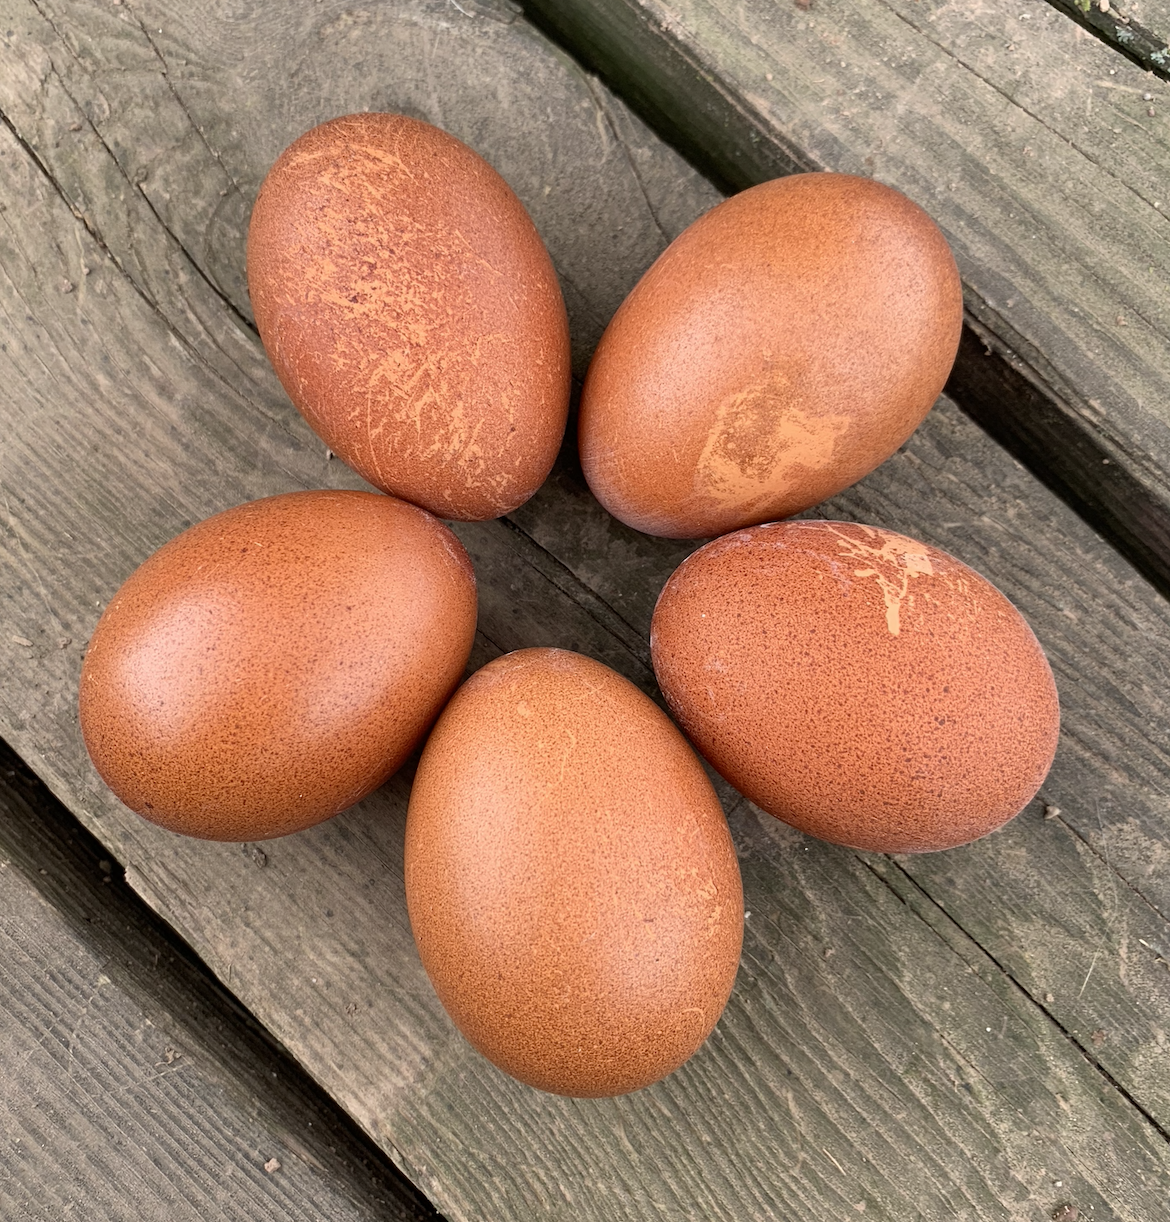 Hatching Egg: Copper Marans